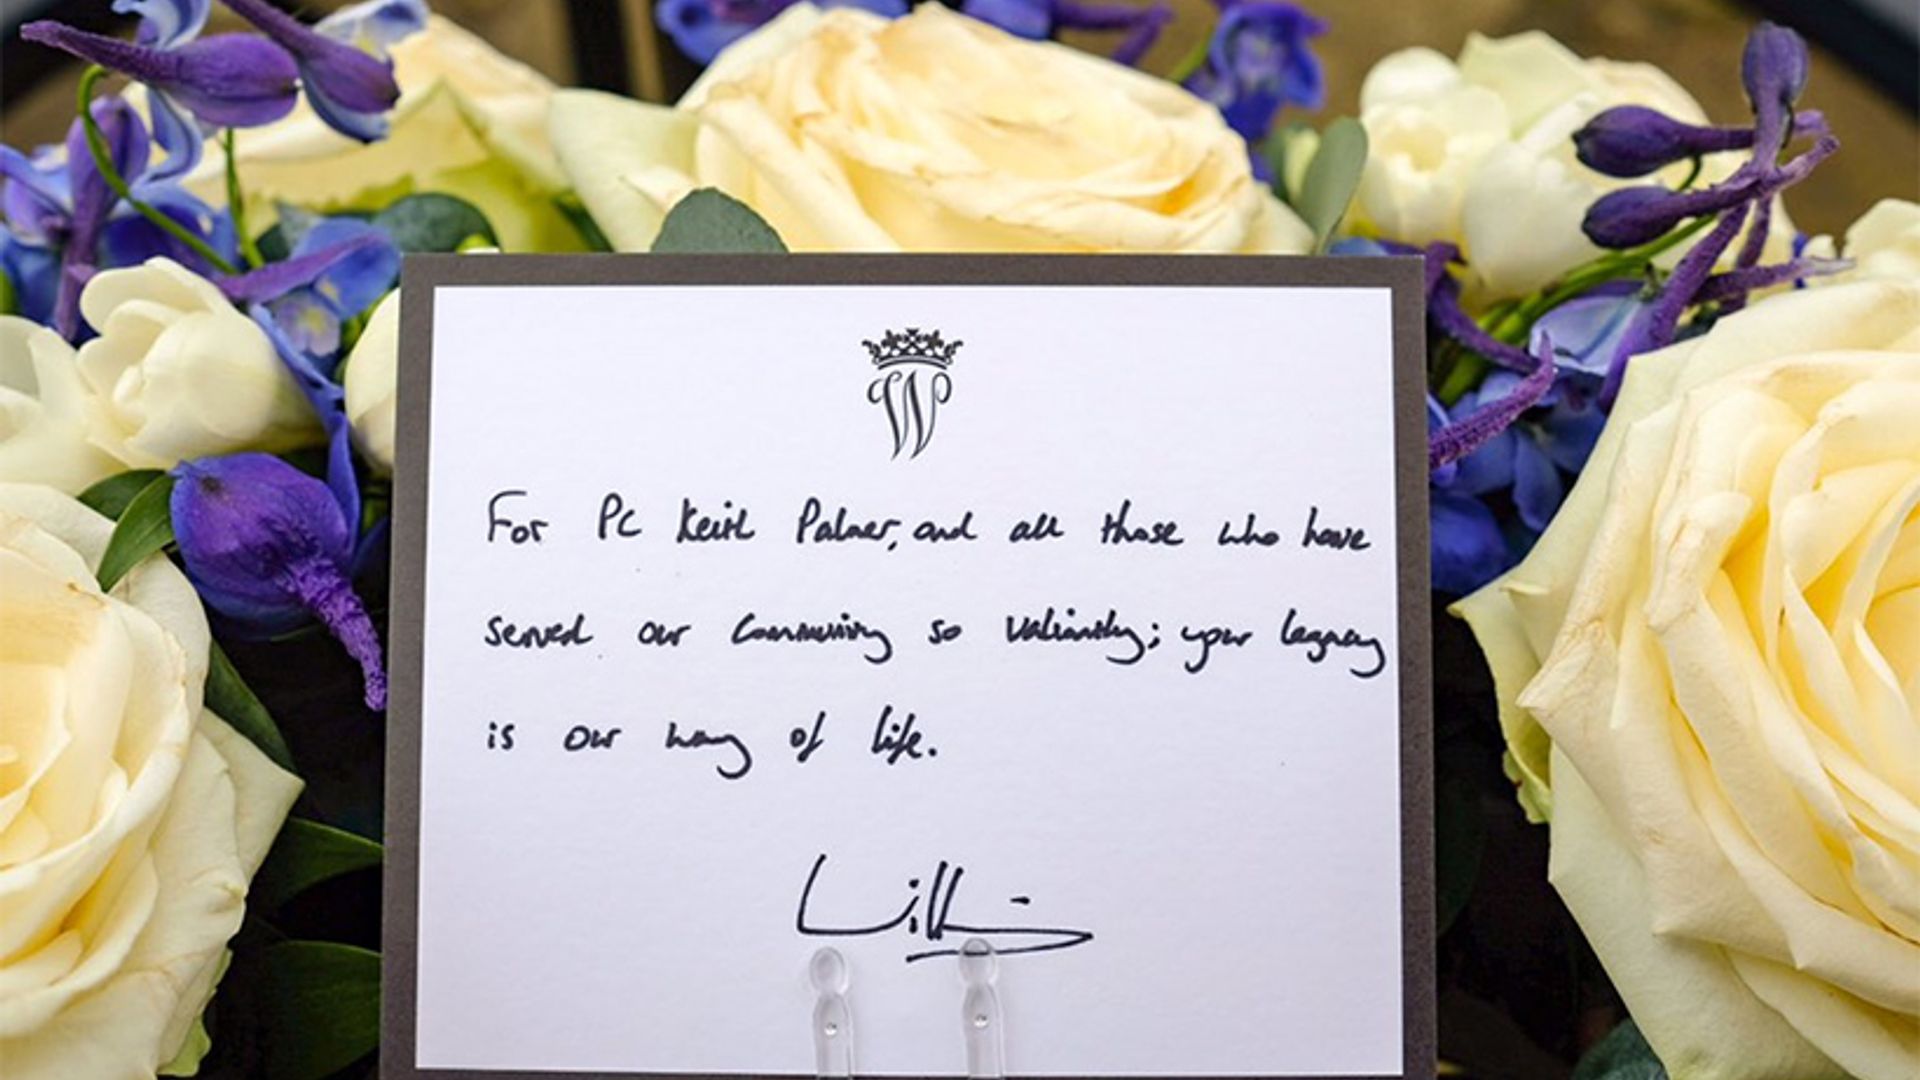 Prince William pays tribute to PC Keith Palmer